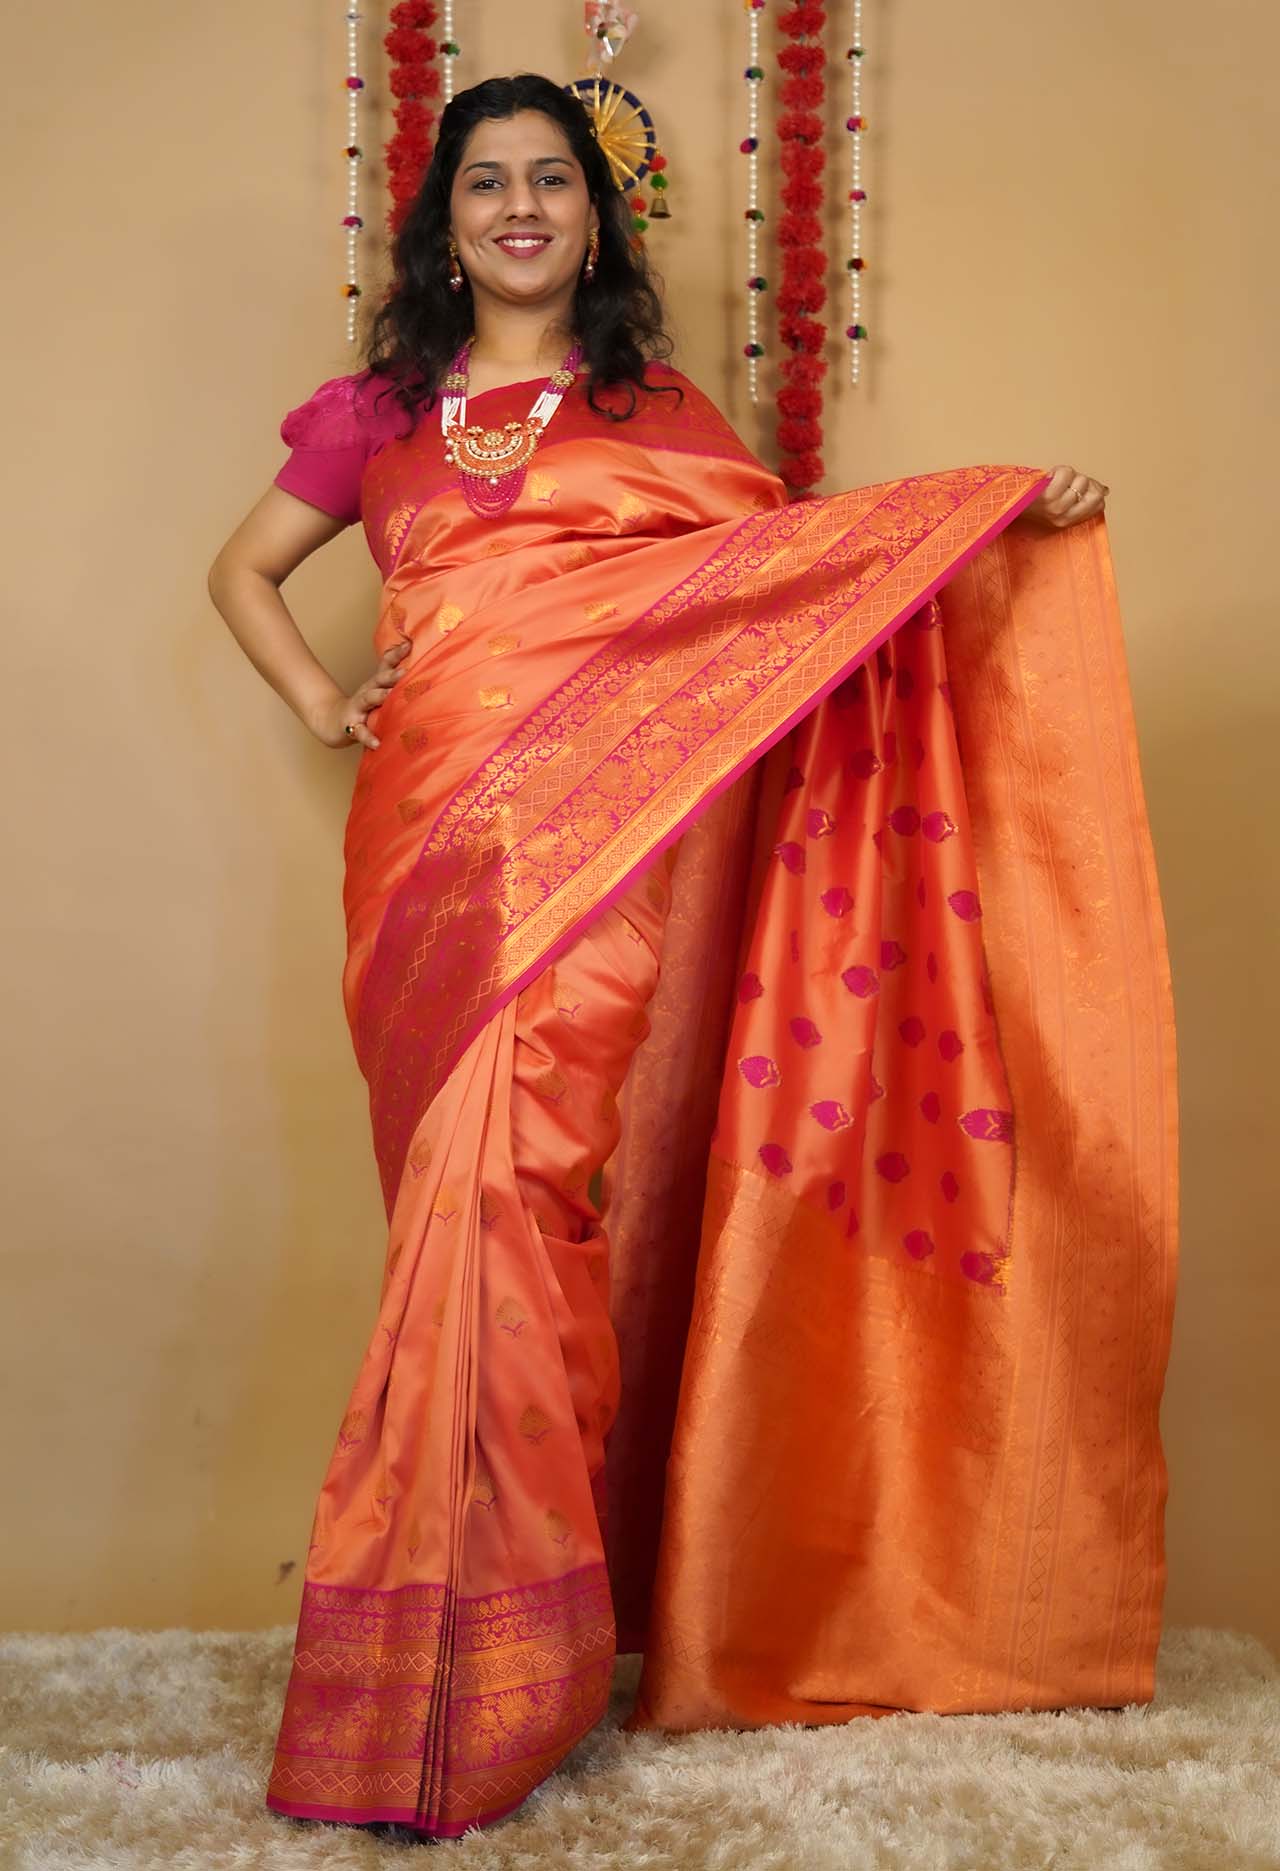 Beautiful Red Orange  Dhoop chaanv banarasi With ornate border and Pallu Wrap in one minute saree